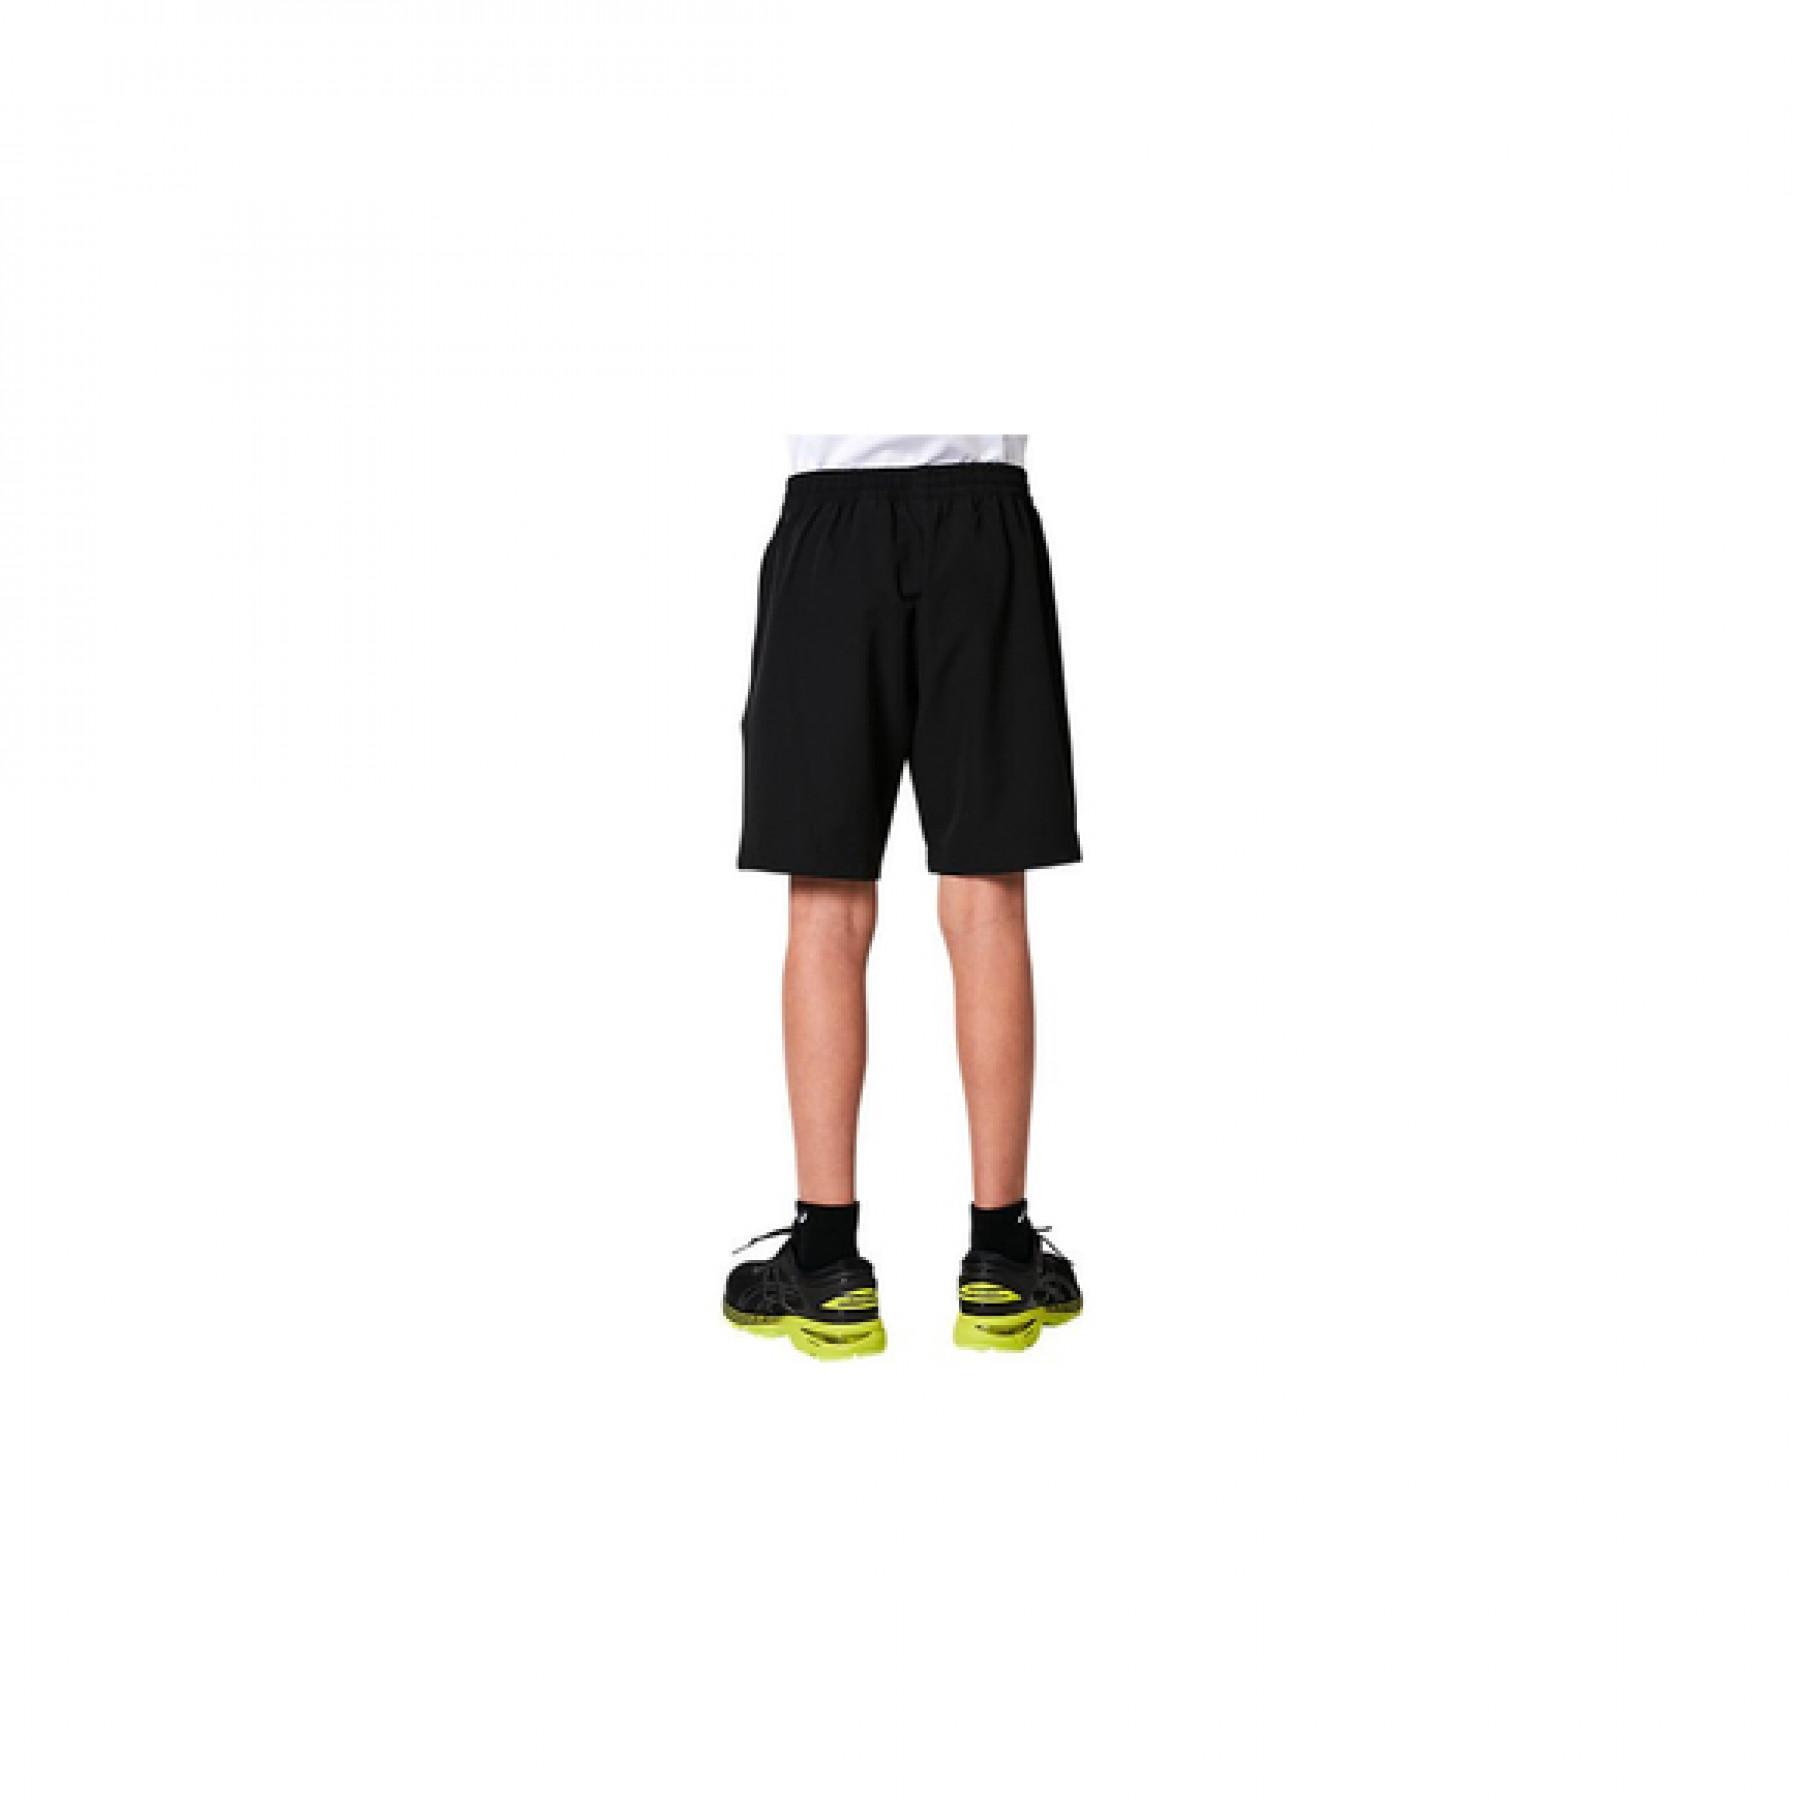 Kinder shorts Asics b Gpx